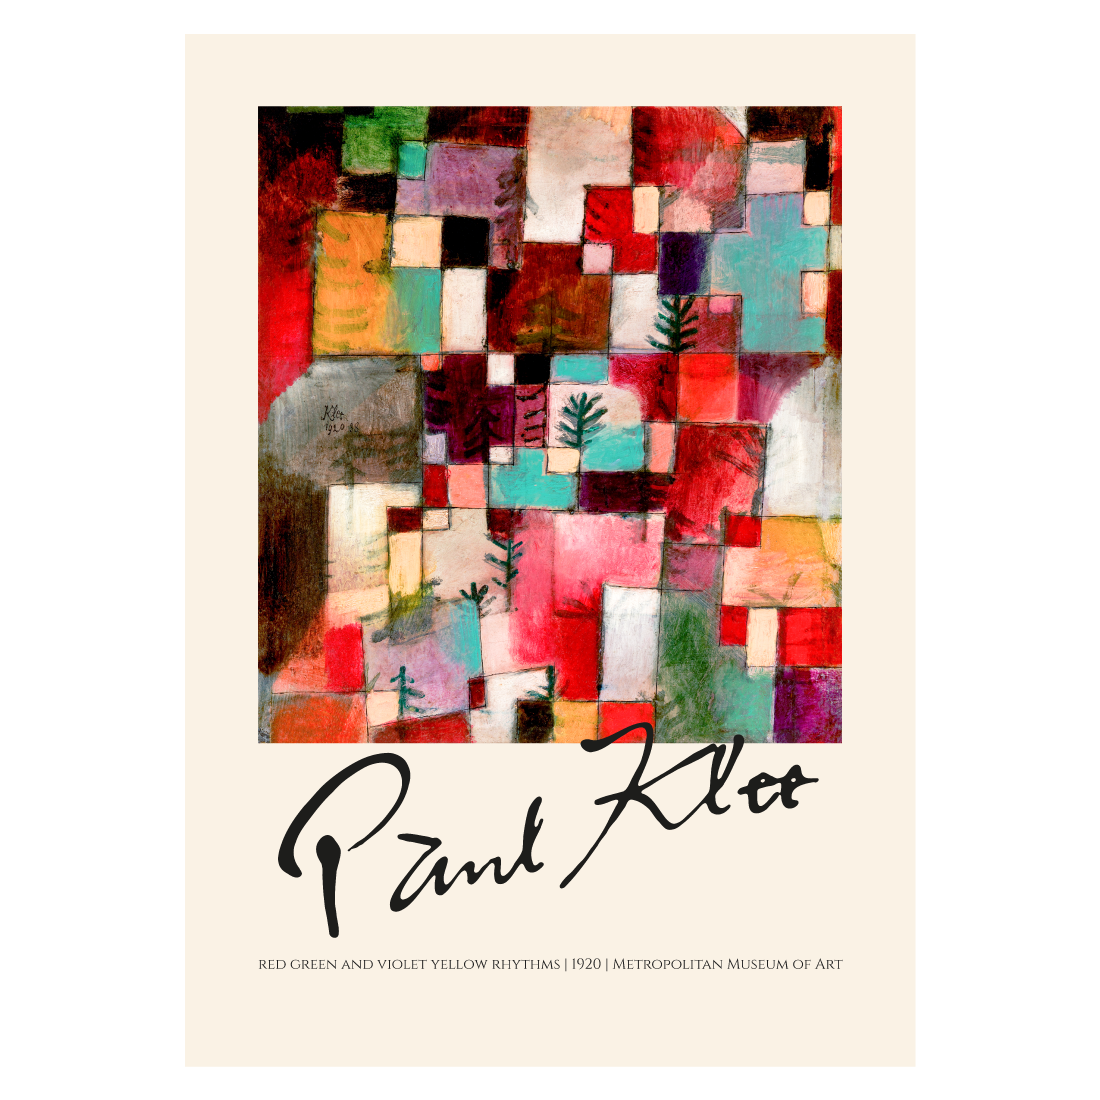 Kunstplakat med Paul Klees "Red green and violet yellow rhythms"